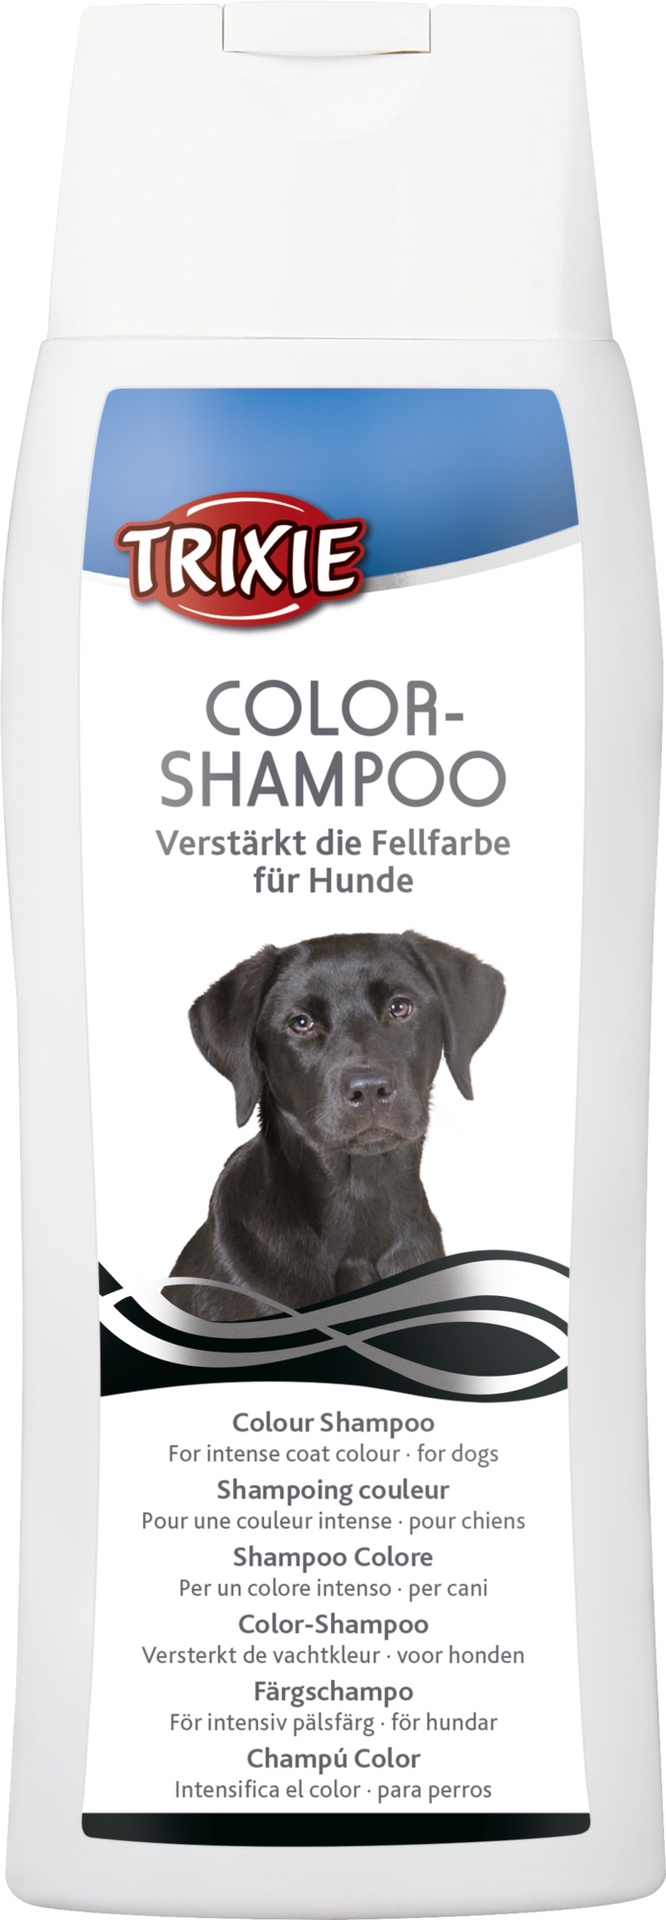 Color-Shampoo